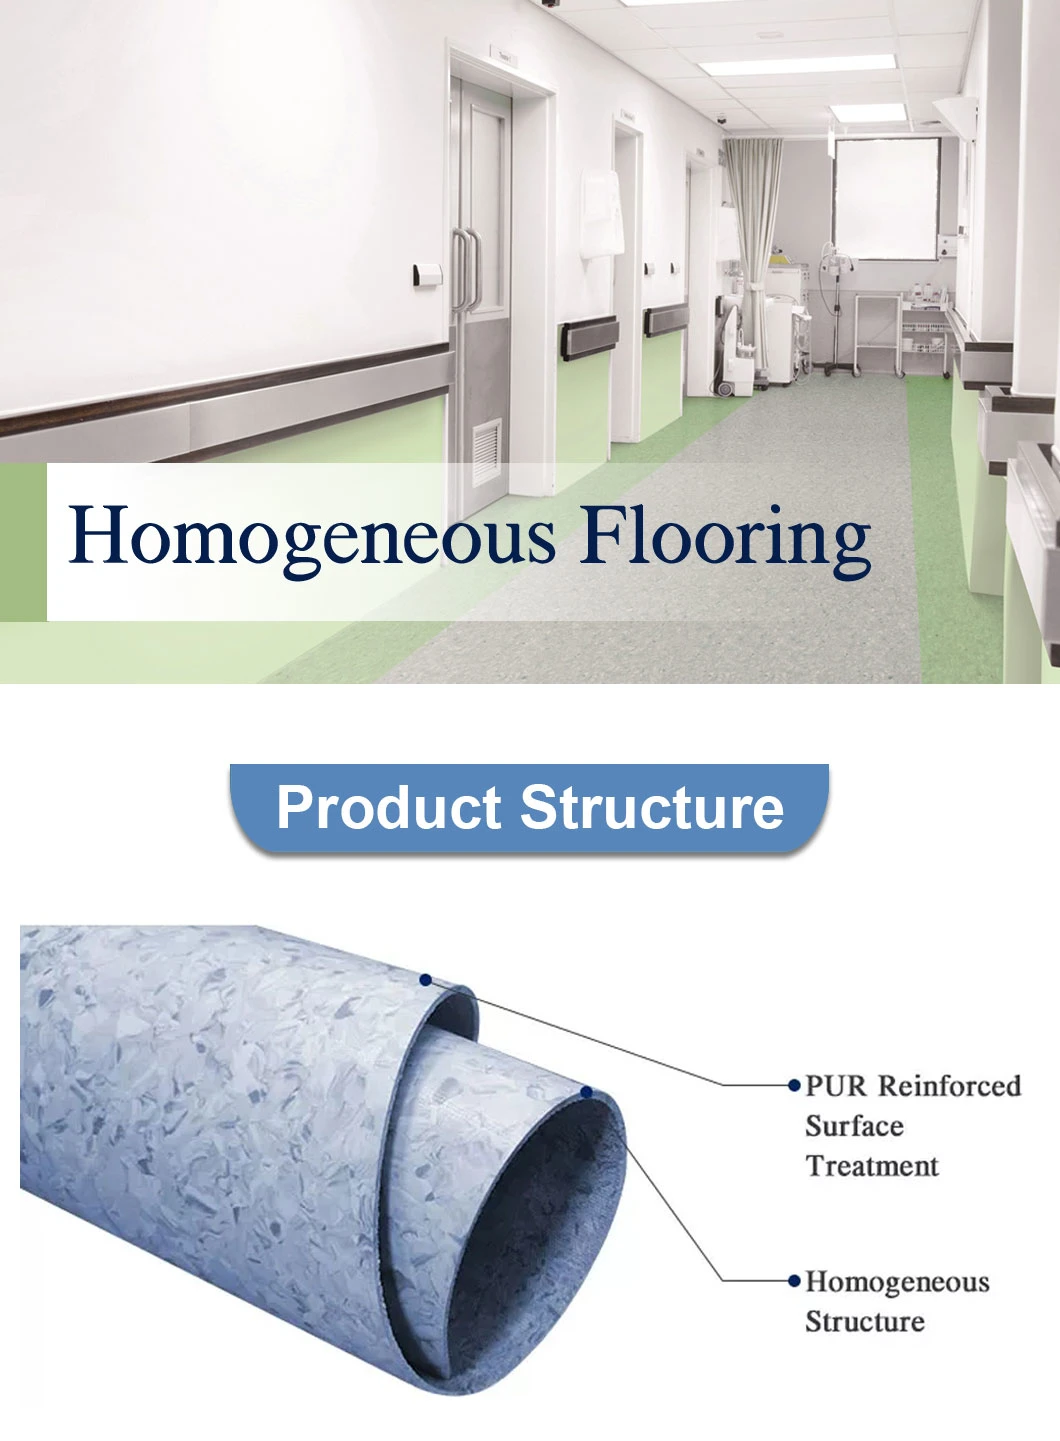 Best Quality 2mm PVC Homogeneous Vinyl Flooring for Office/School/Hospital